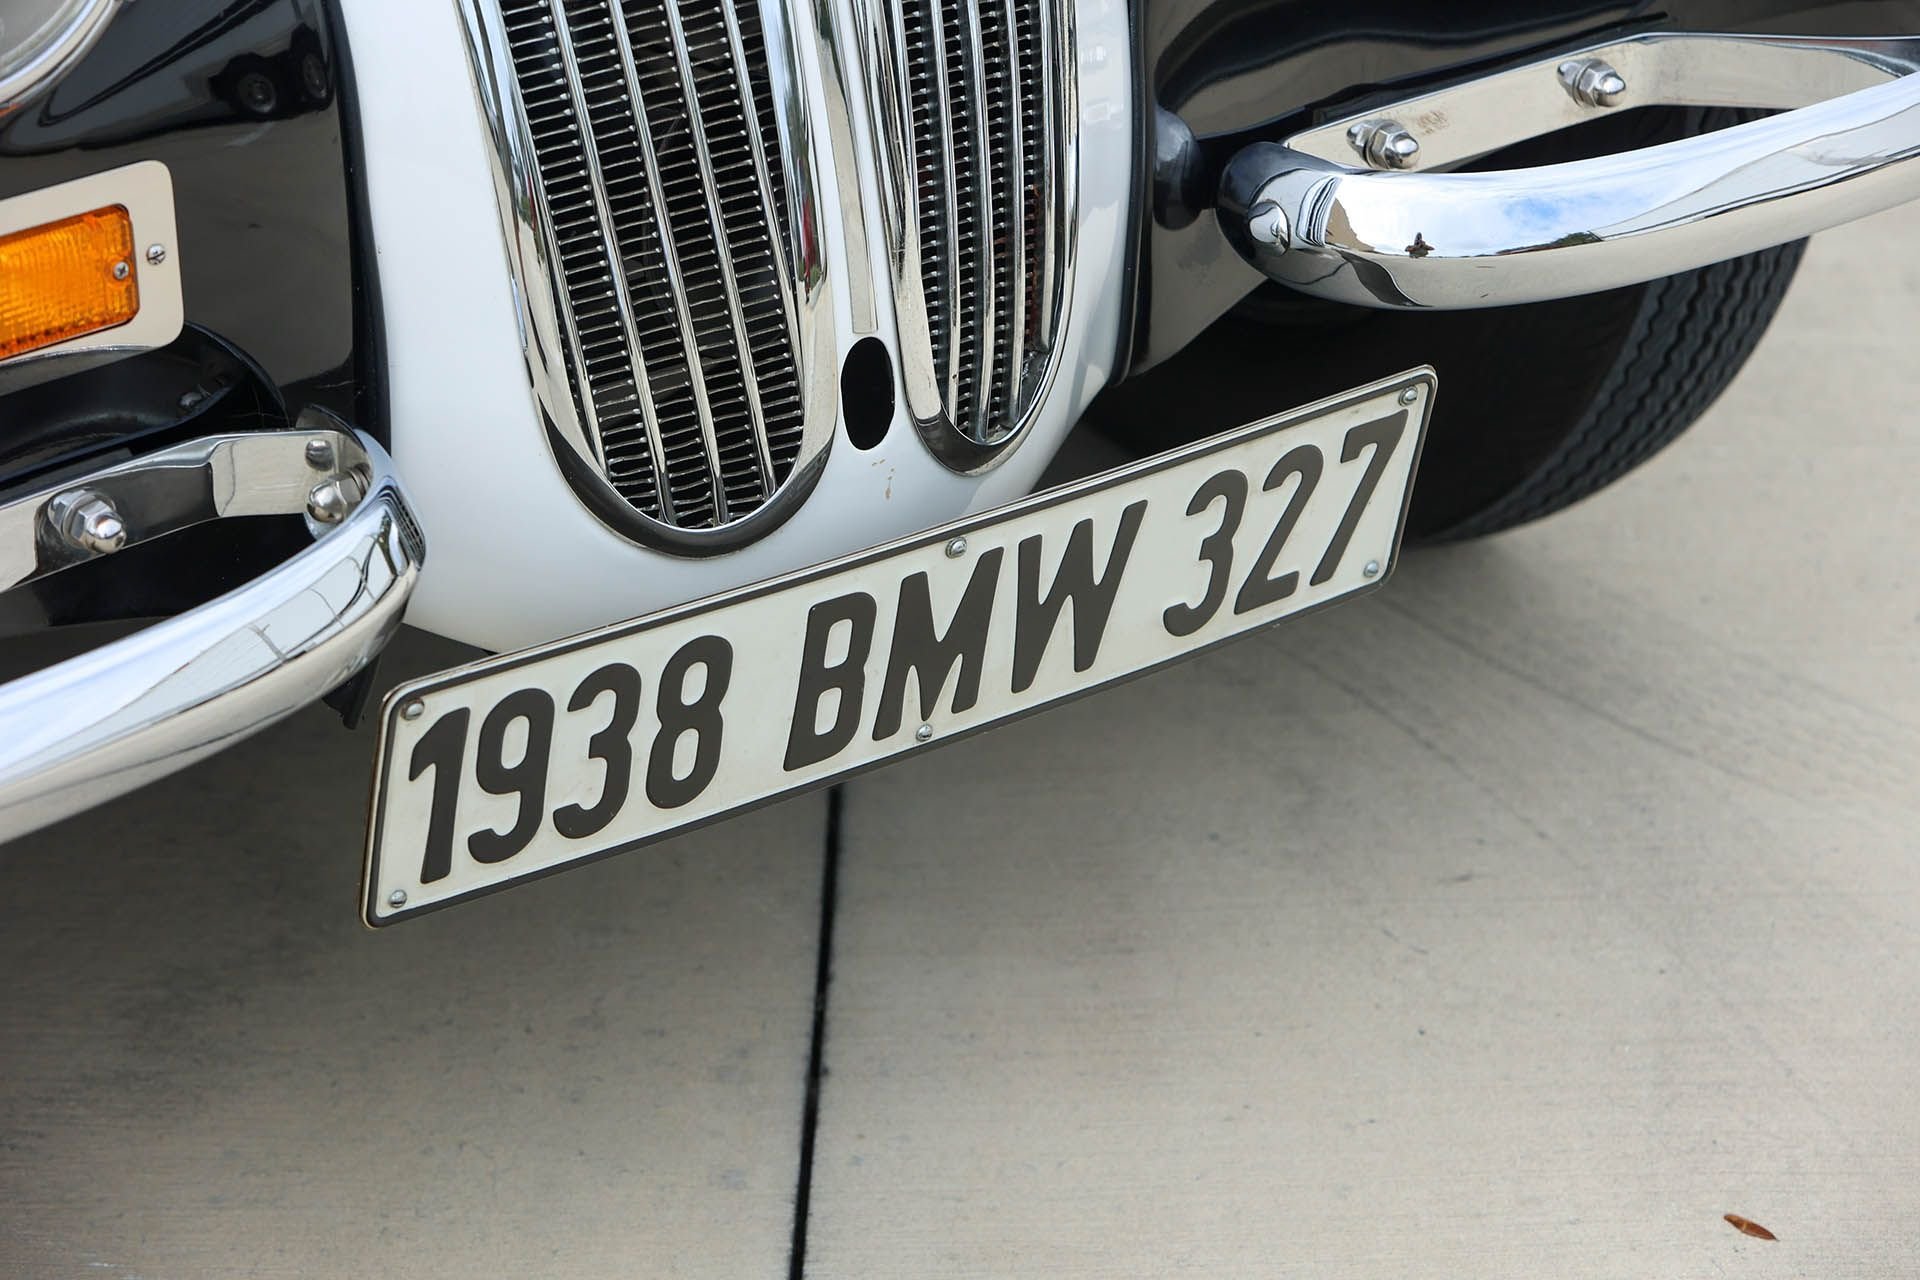 For Sale 1938 BMW 327 Cabriolet